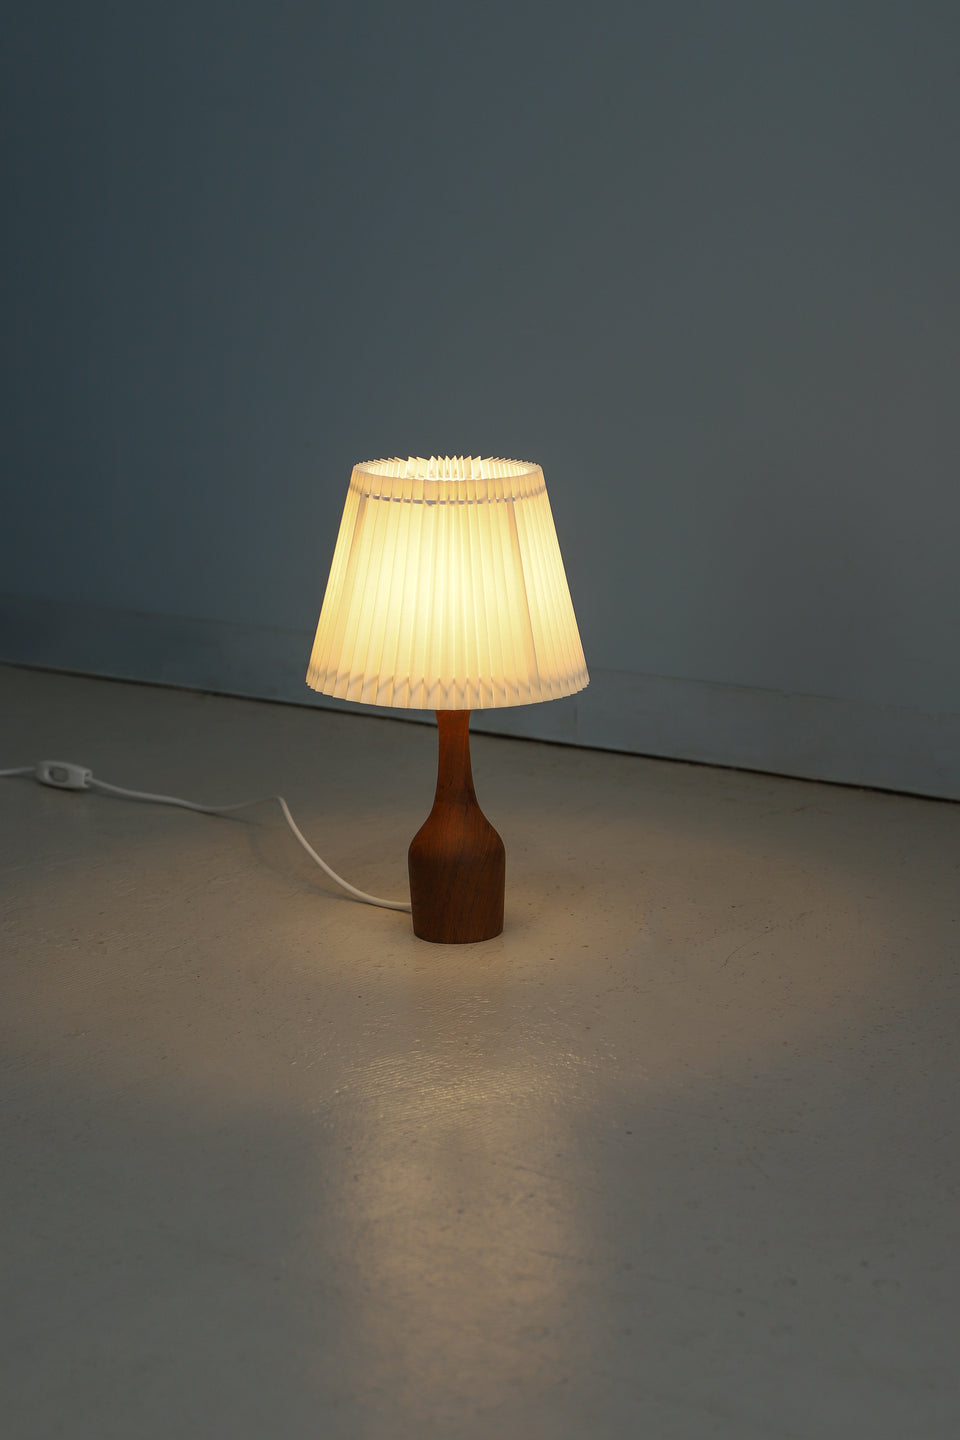 Teakwood Small Table Lamp Danish Vintage/デンマークヴィンテージ テーブルランプ 間接照明 チーク材 北欧インテリア